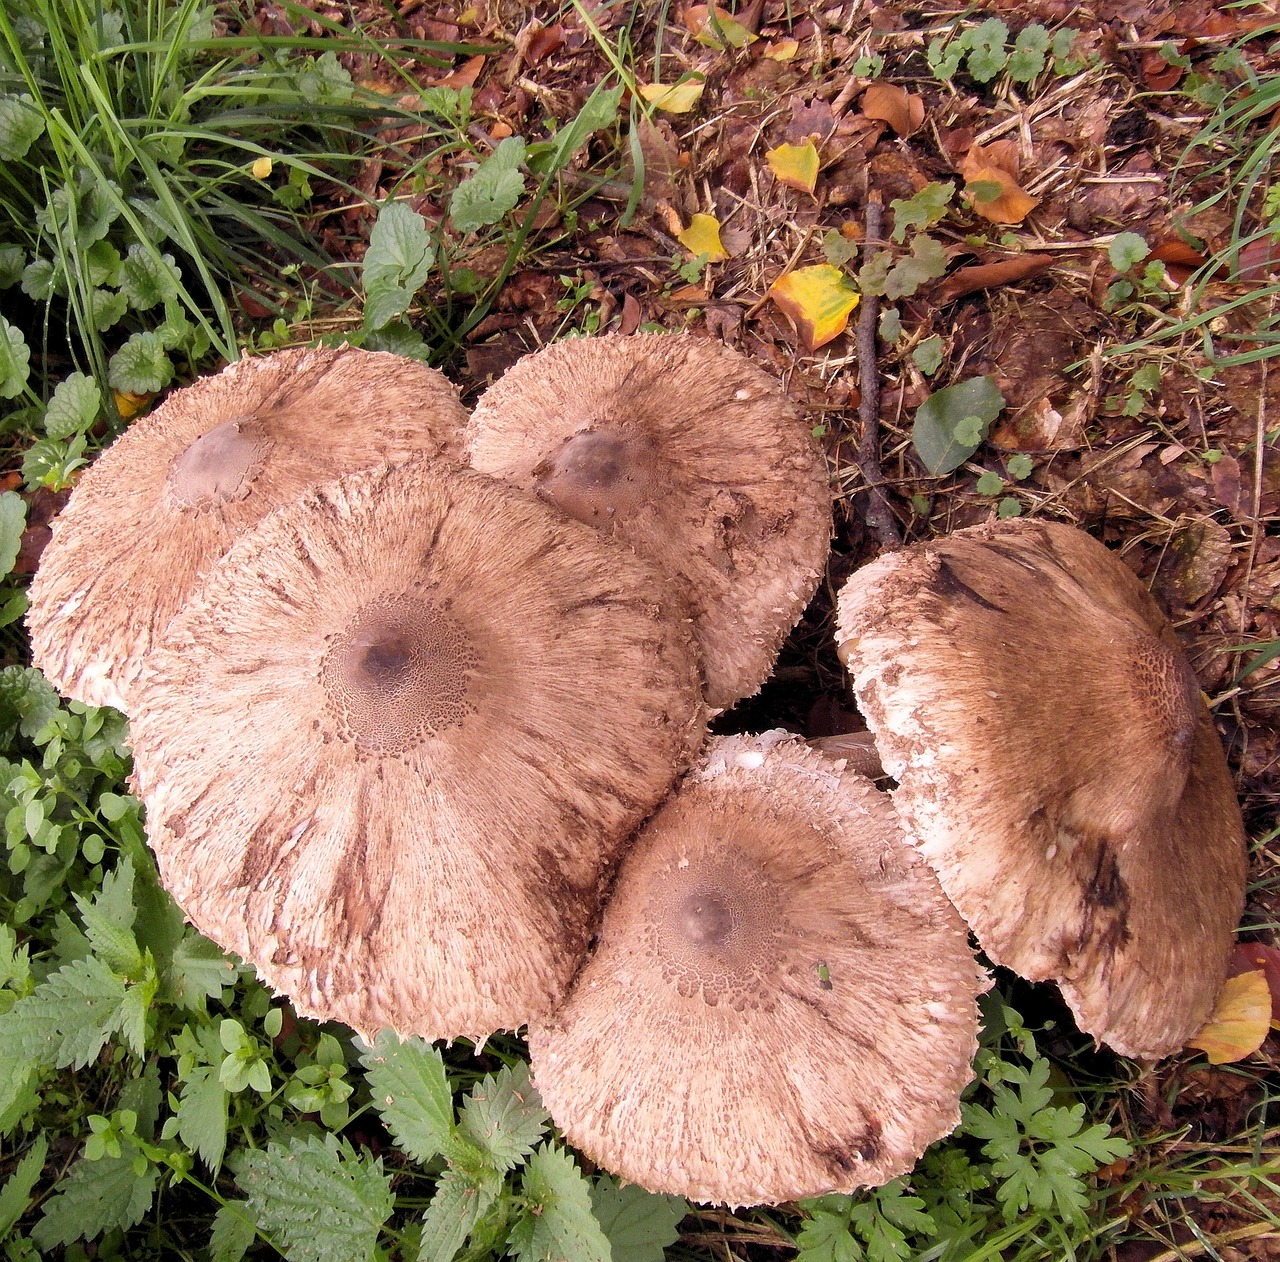 Mushroom Compost: Care for Some Black Gold?